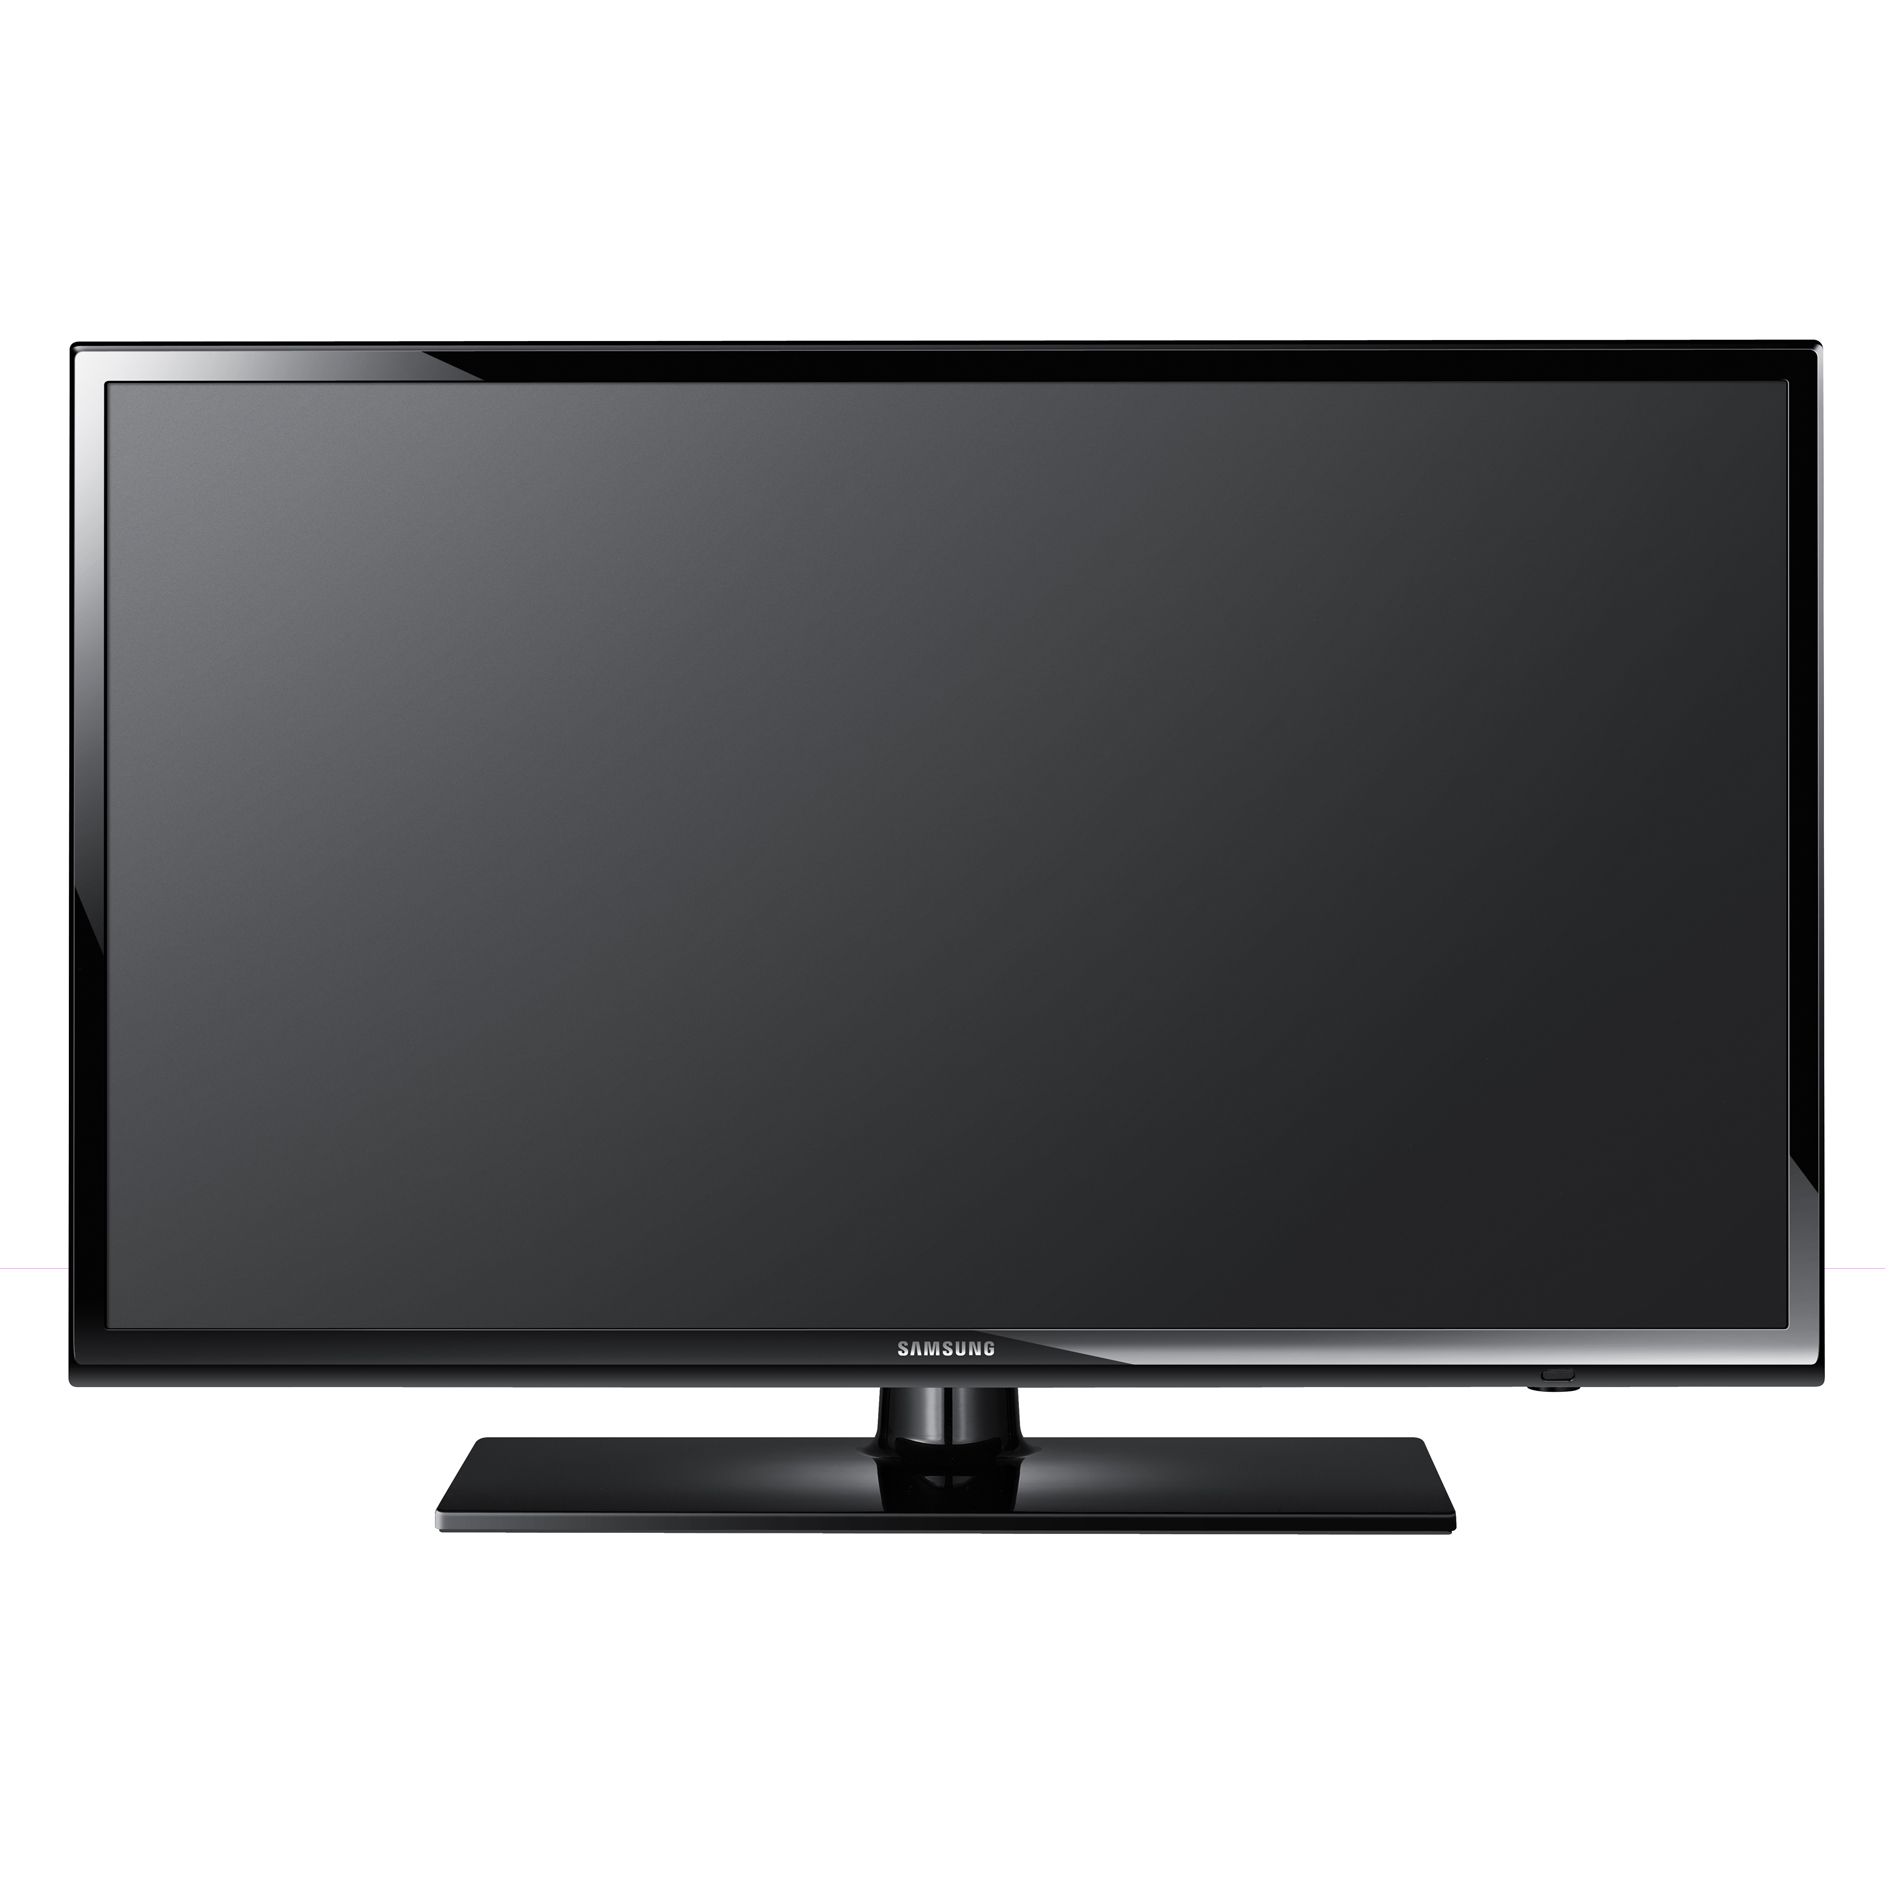 Samsung UN60EH6003F 60-Inch 1080p LED-LCD TV